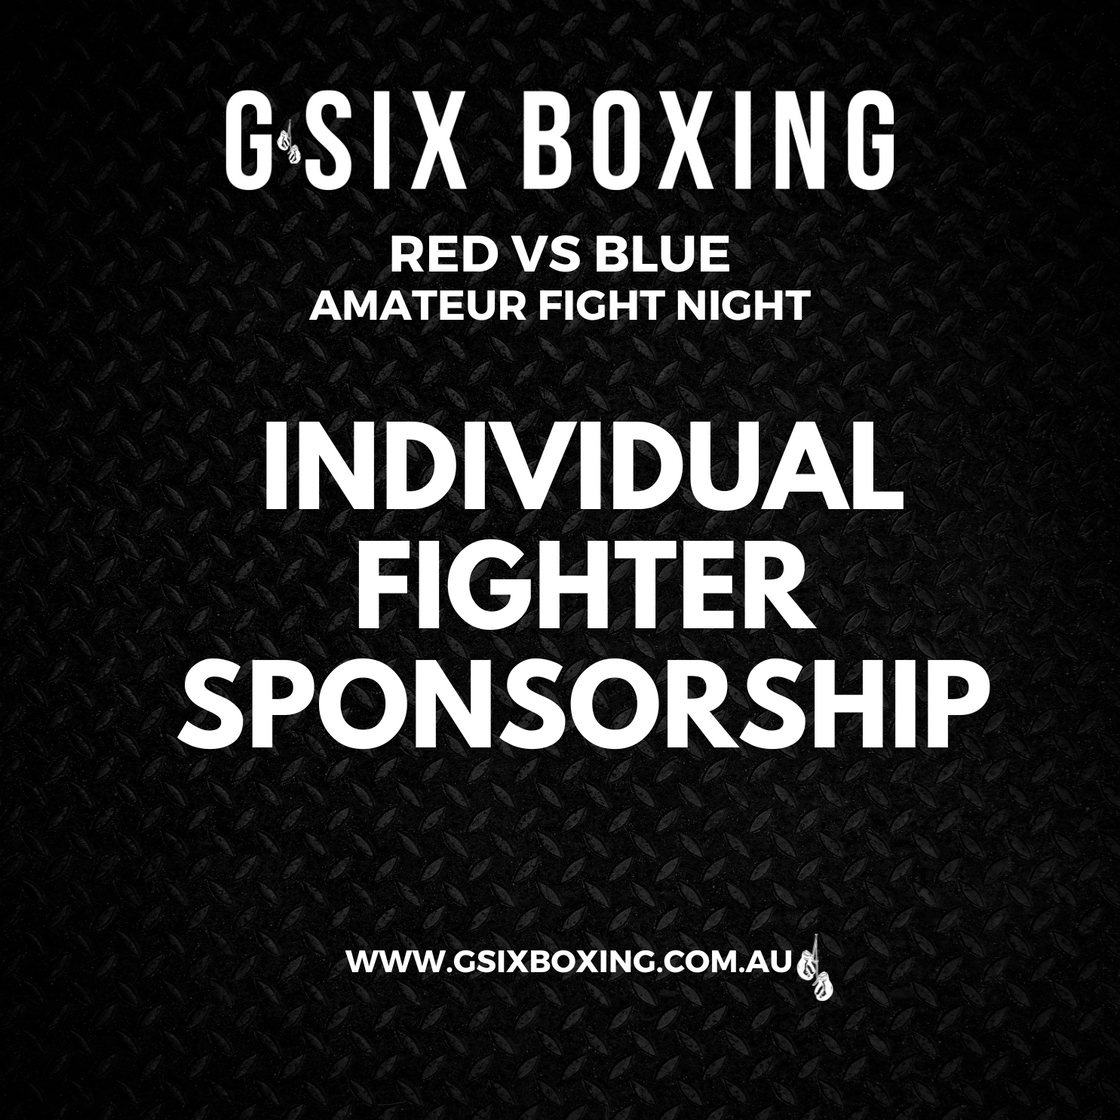 Individual Red vs Blue Fighter Sponsorship!